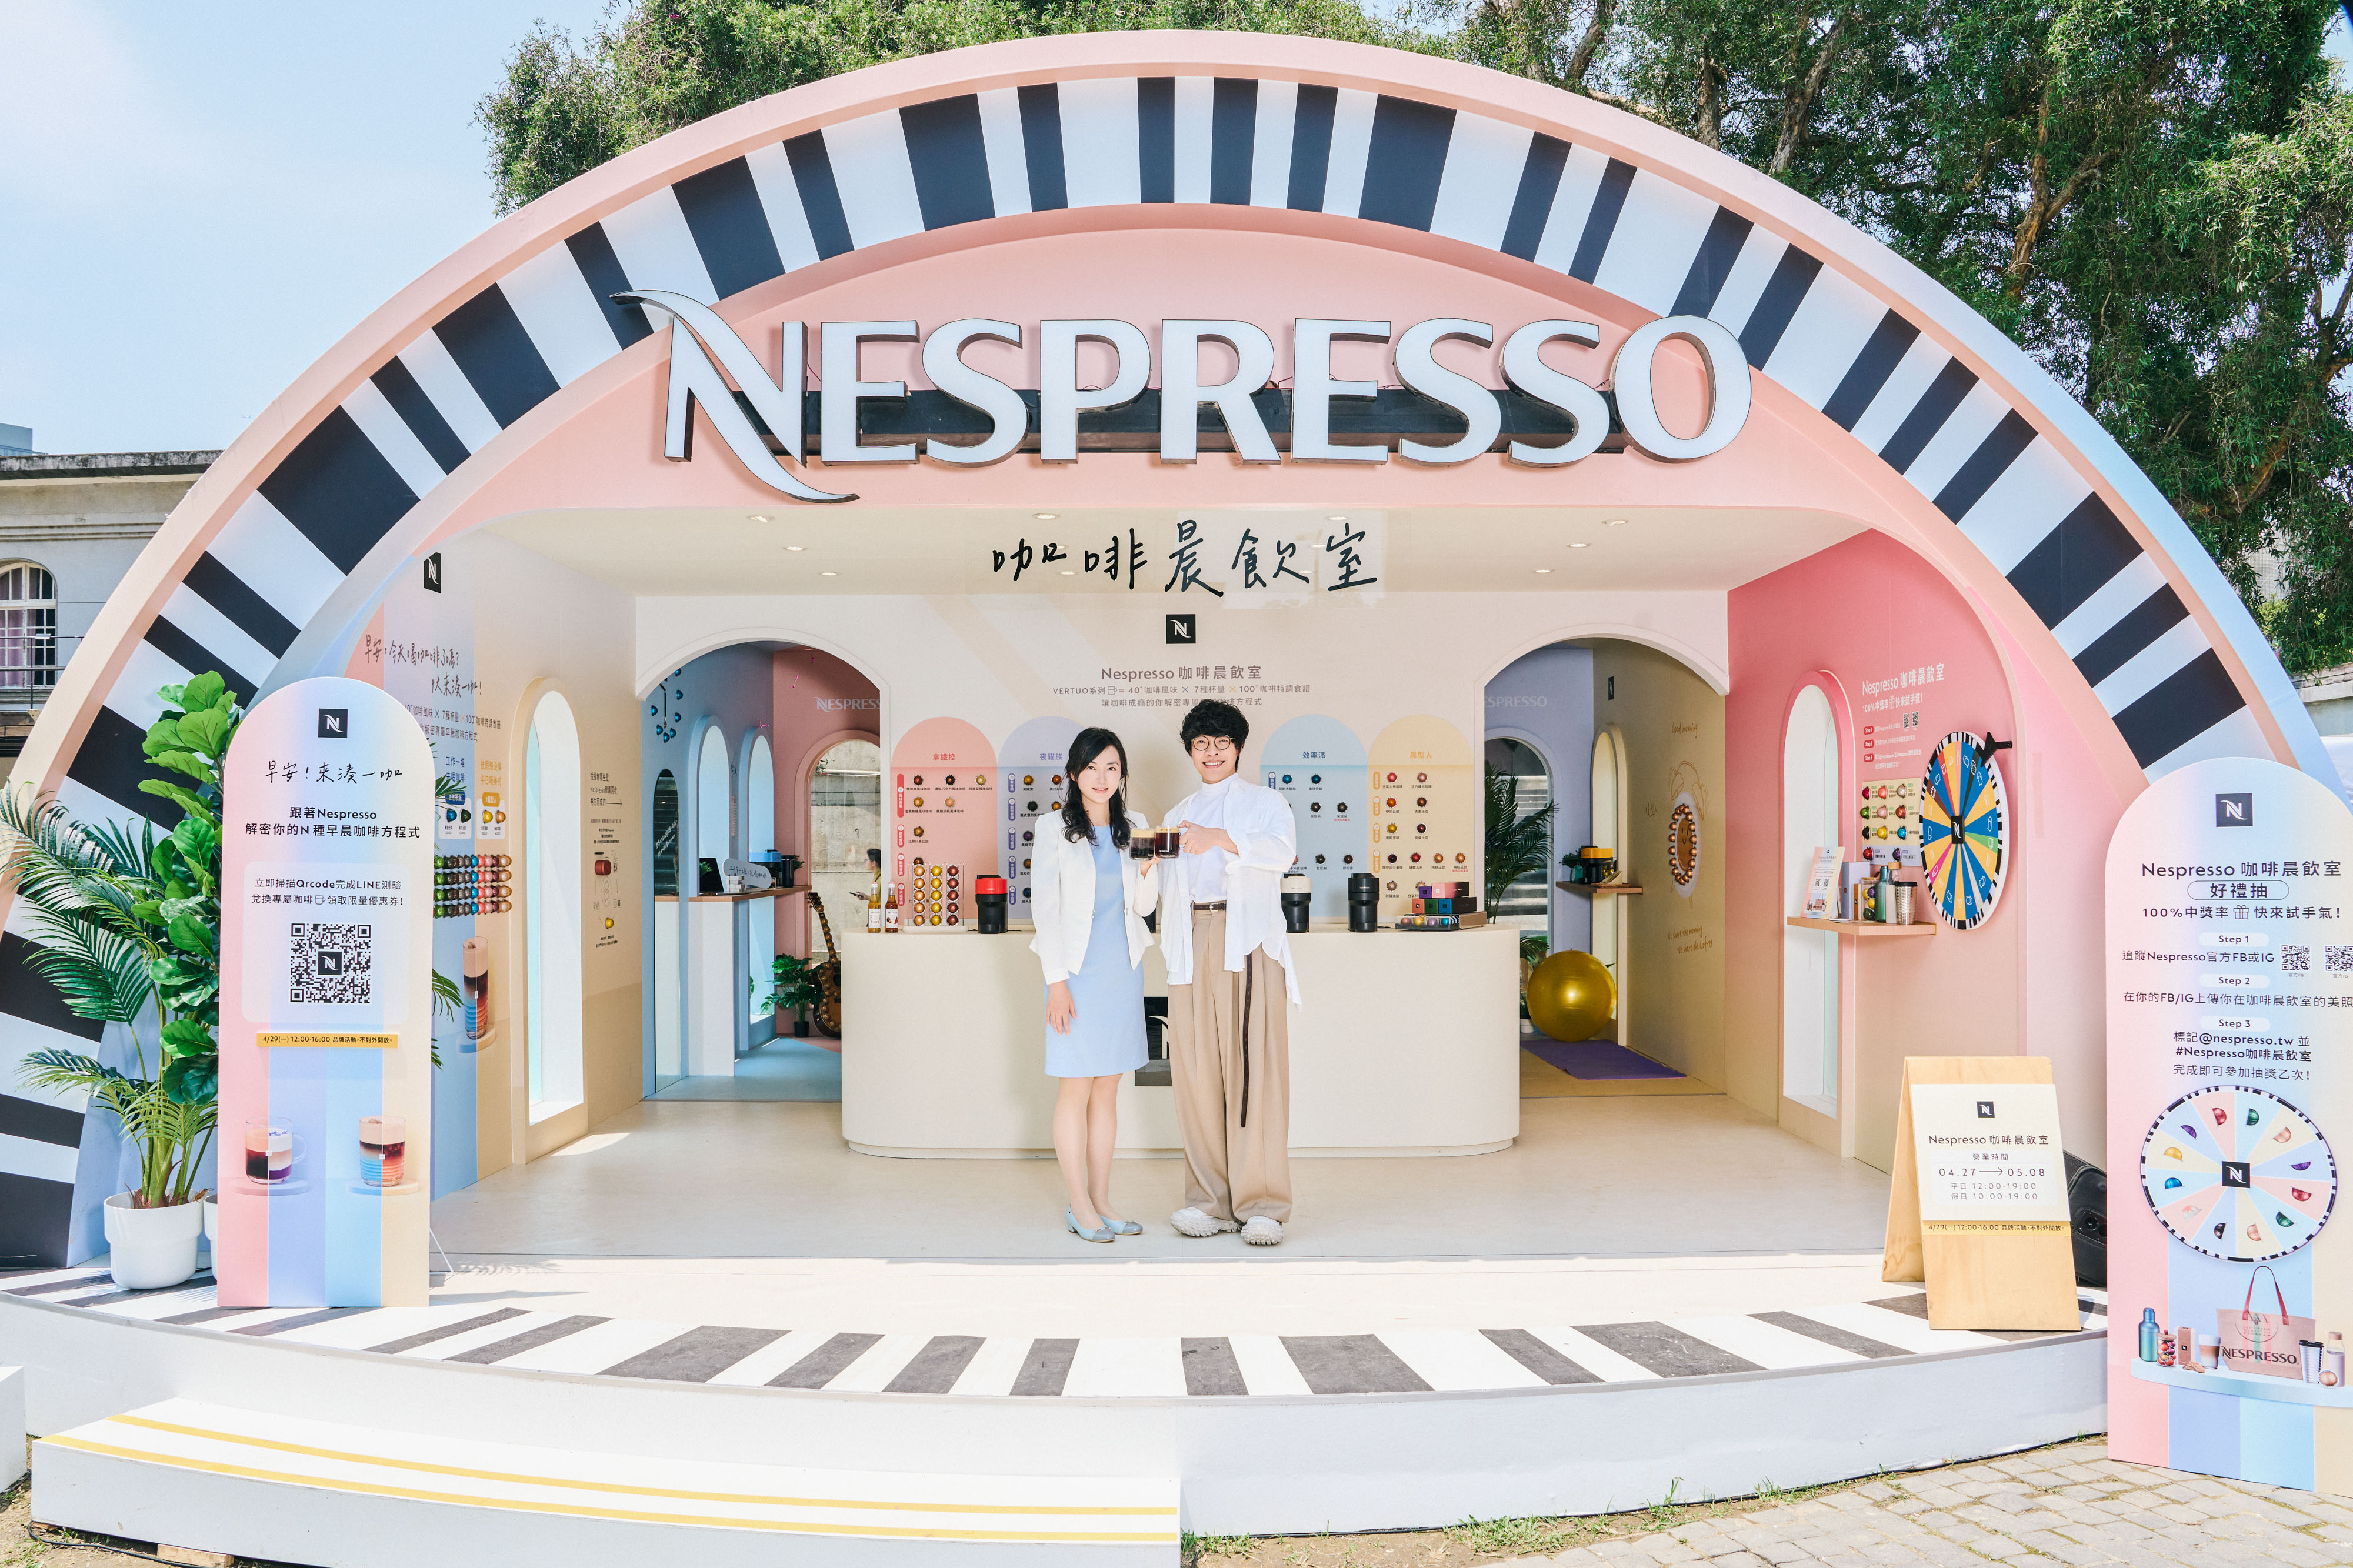 Nespresso巨大咖啡膠囊空降華山！與早晨咖啡推廣大使盧廣仲一起探索對咖啡的百種想像